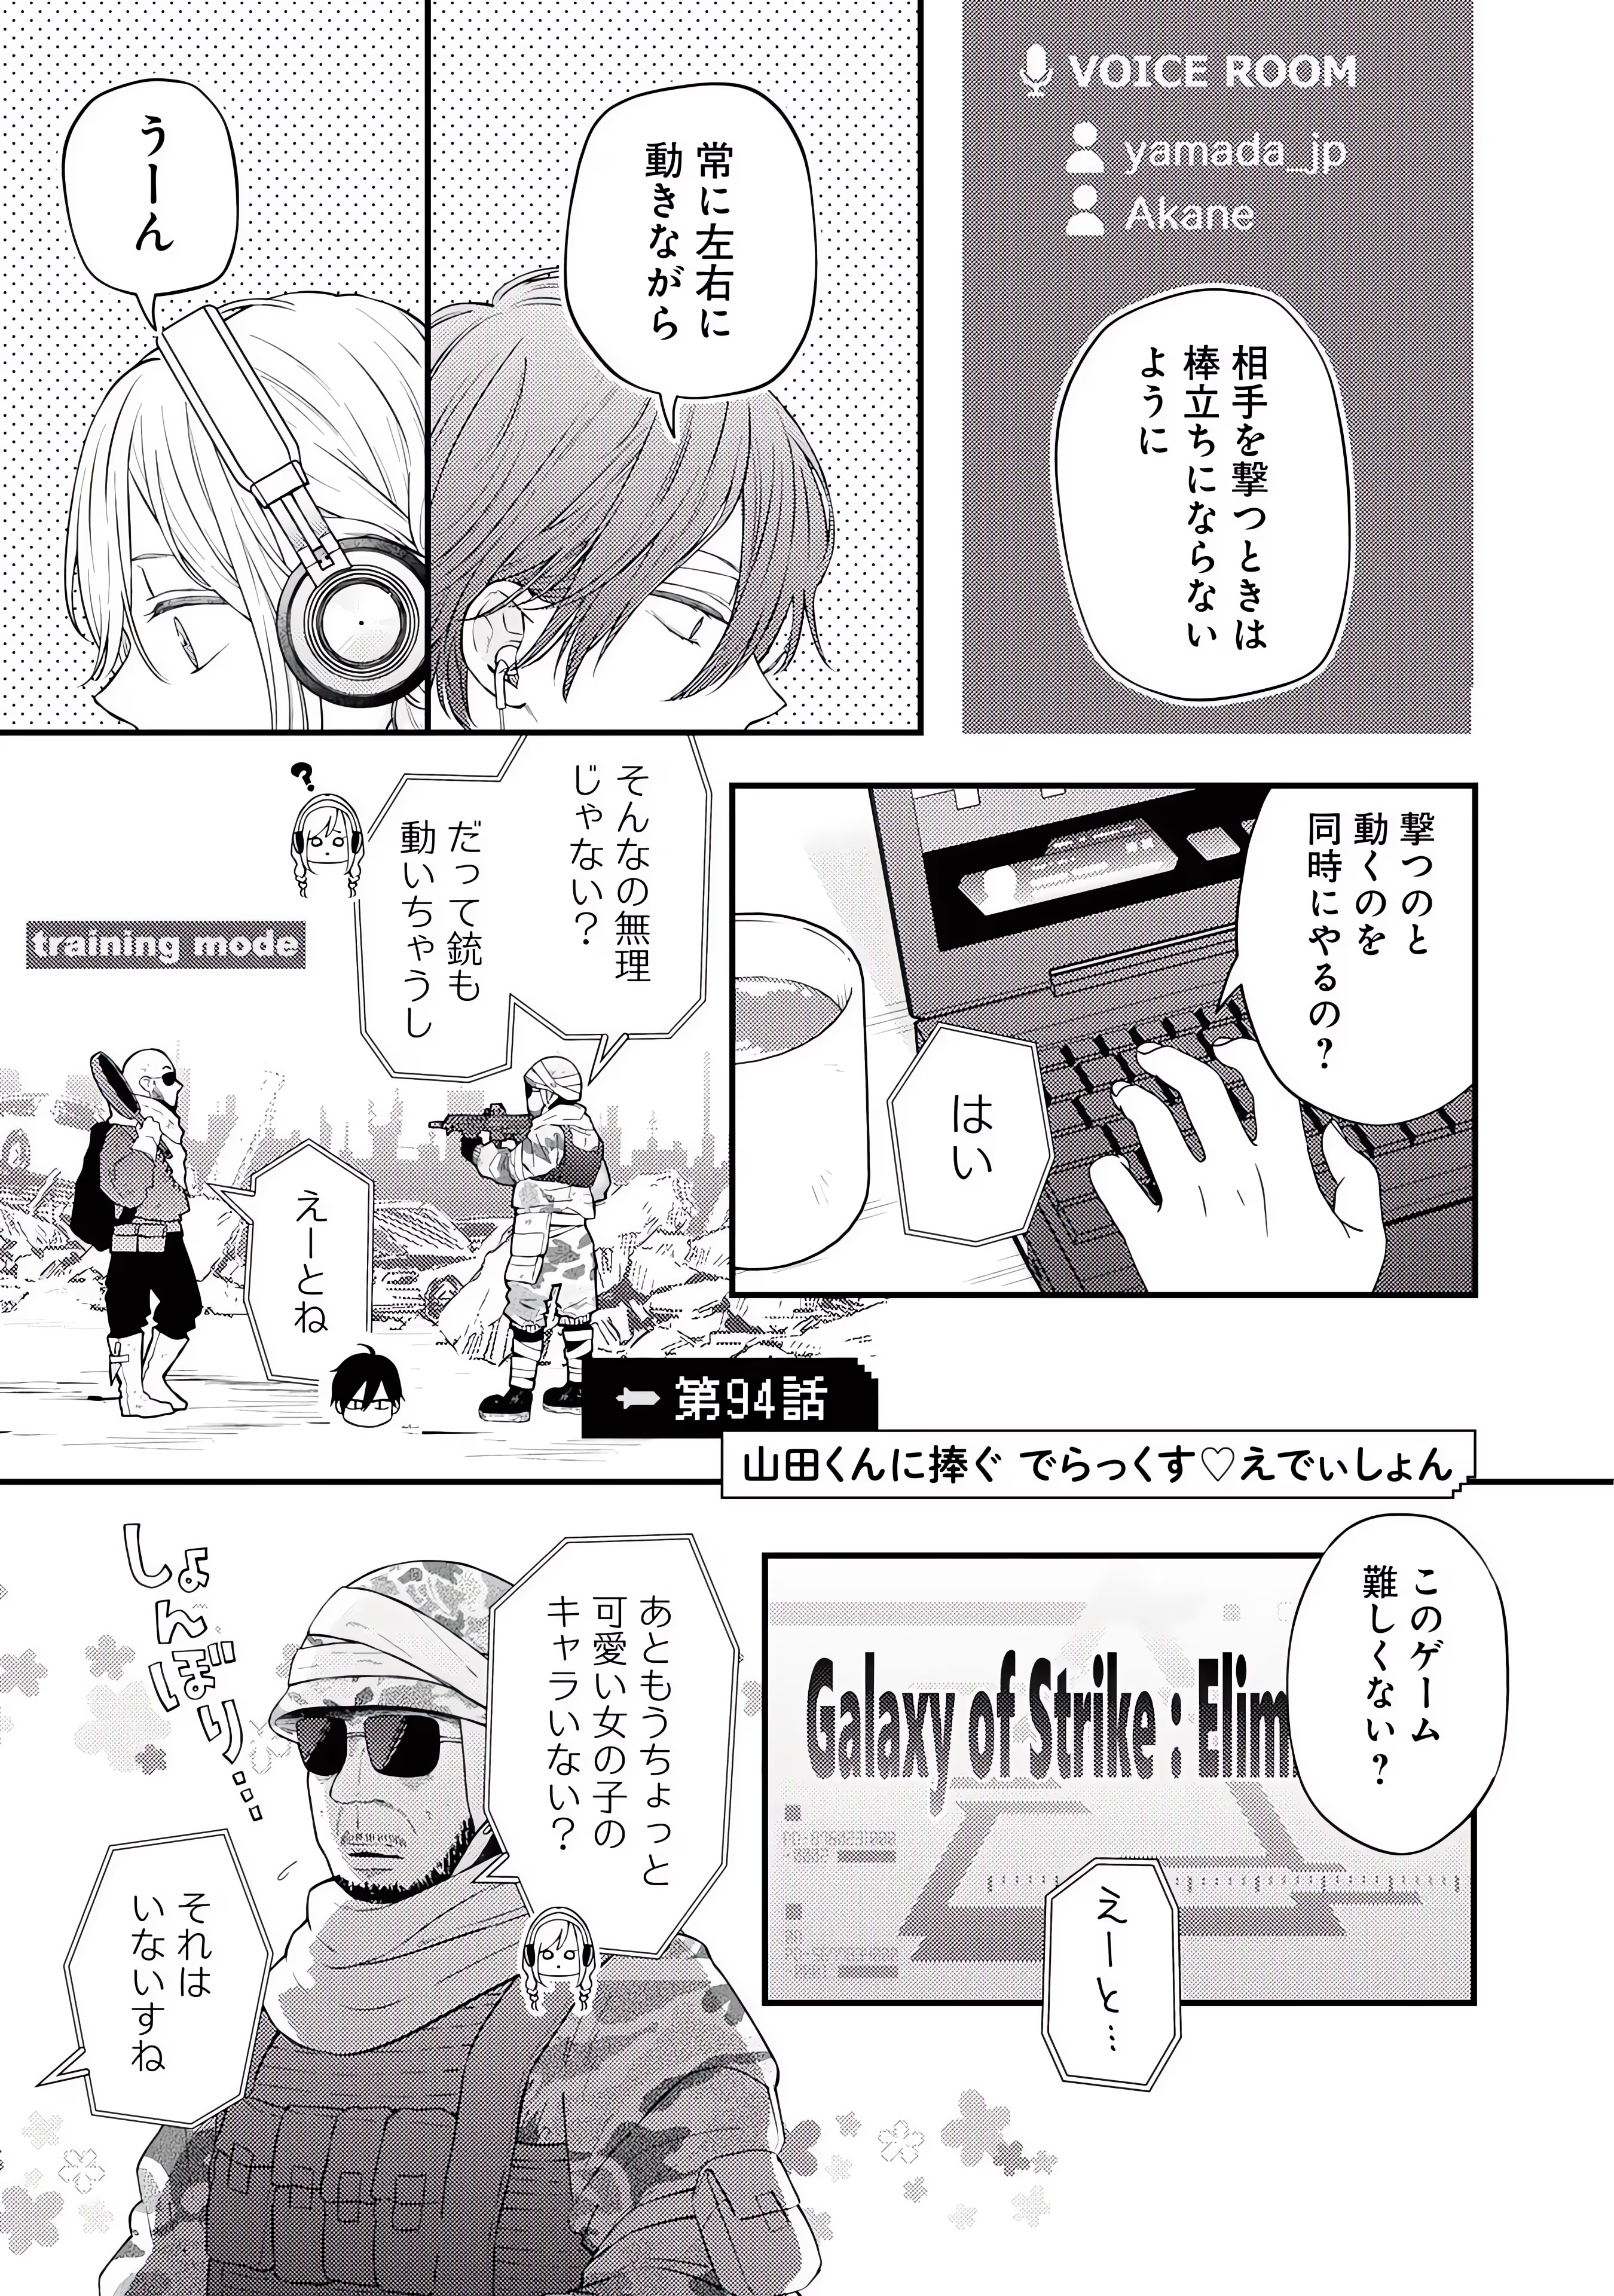 My Love Story with Yamada-kun at Lv999 Manga Getting Print Release